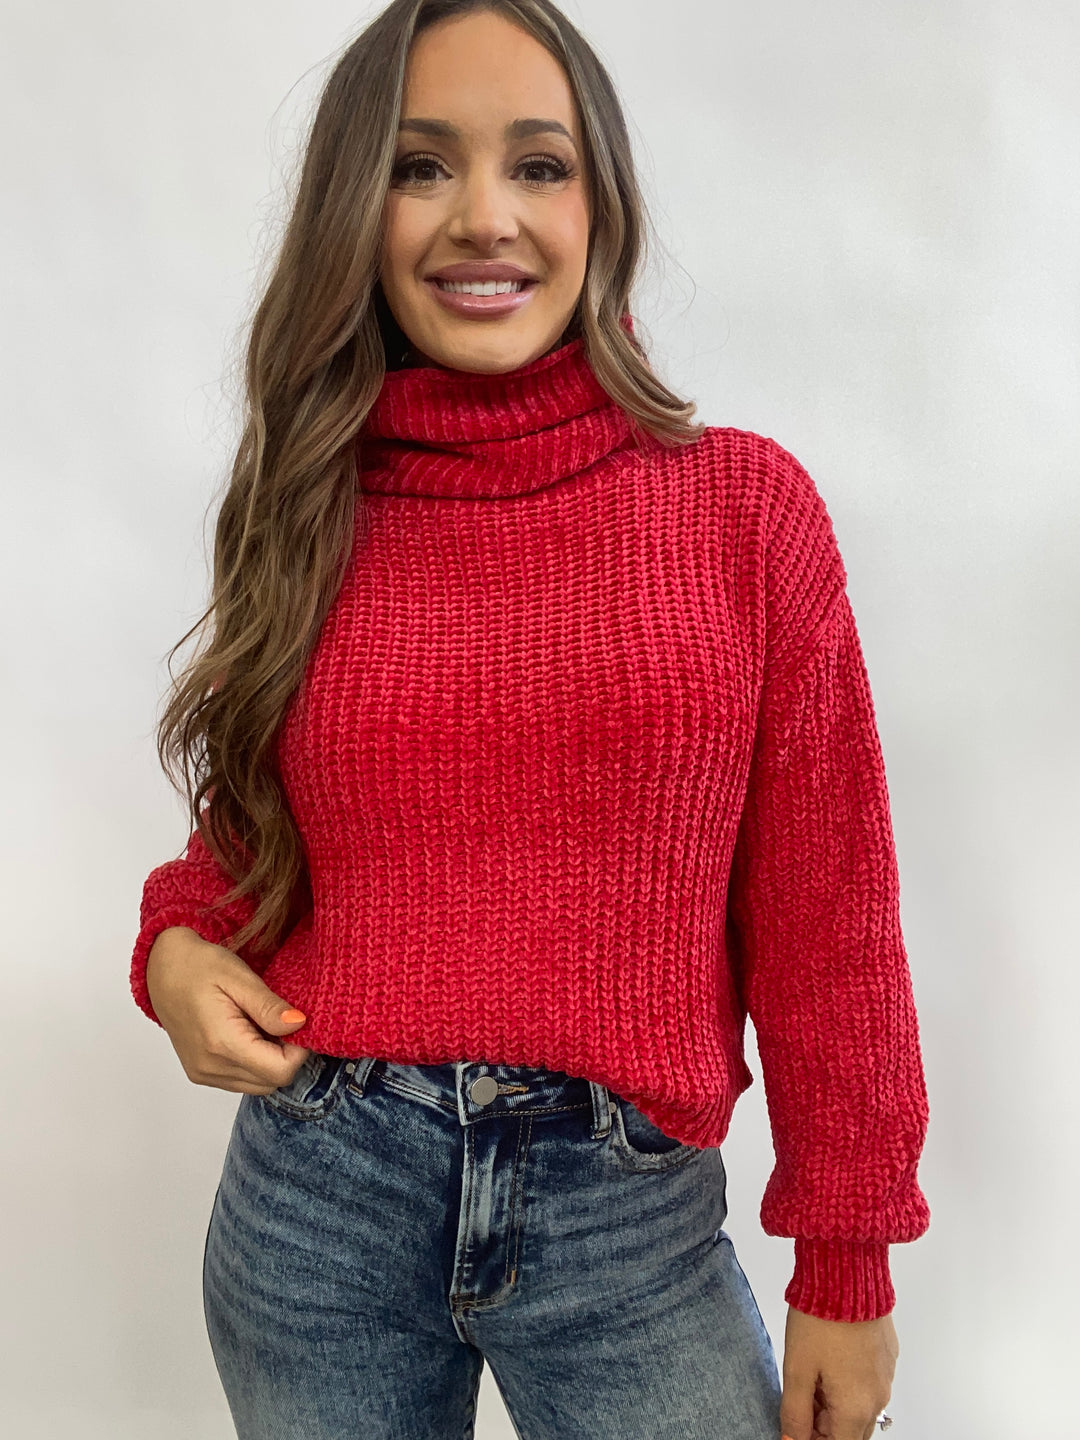 Octavia Turtleneck Sweater- Ruby Red